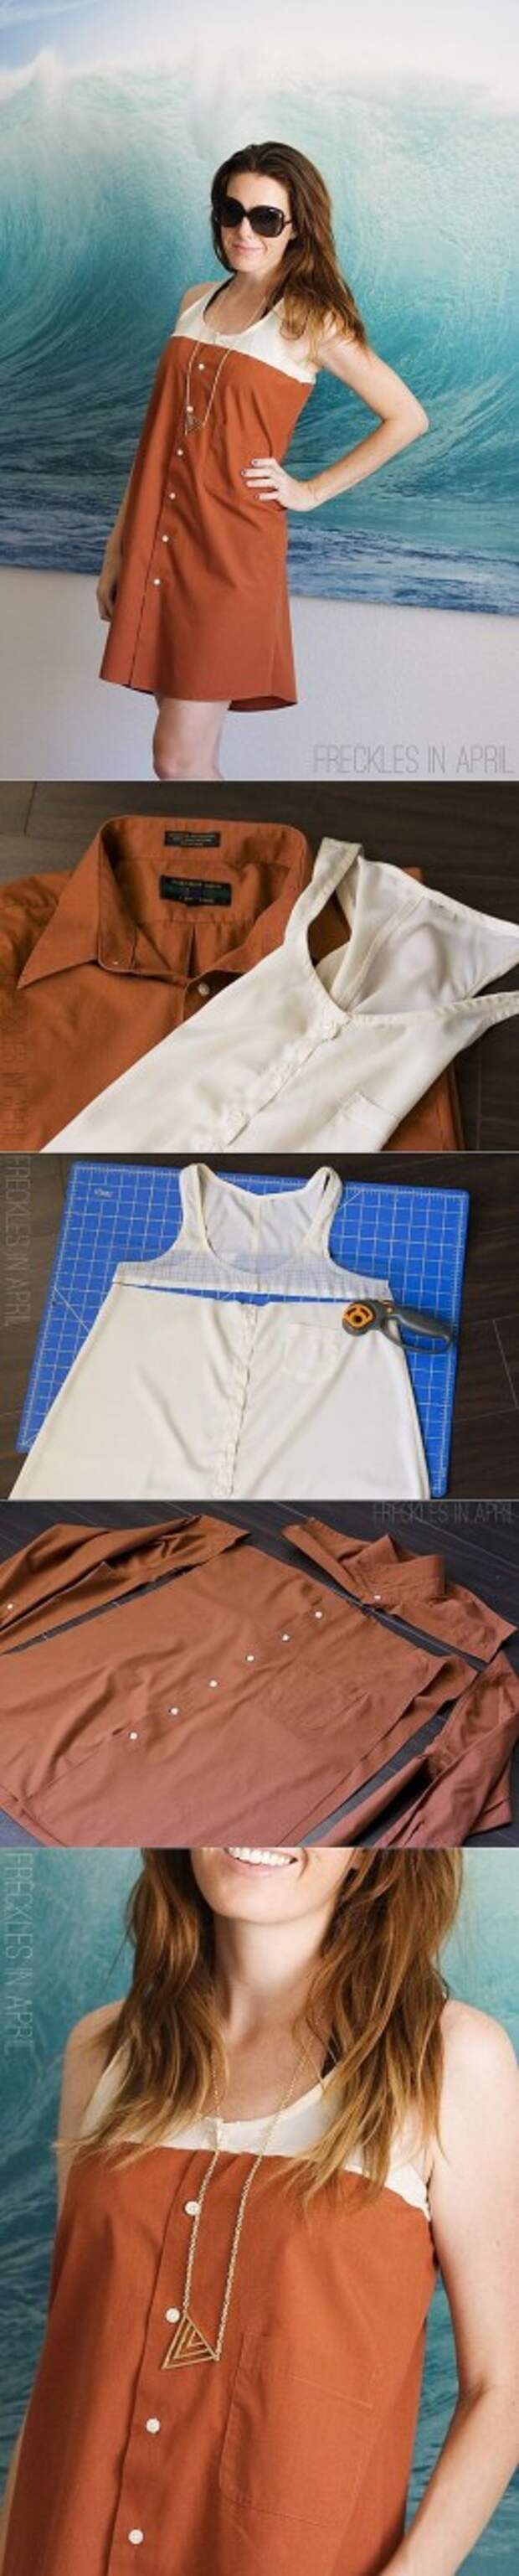 Переделка рубашки в летнее платье (Diy) / Рубашки /: 